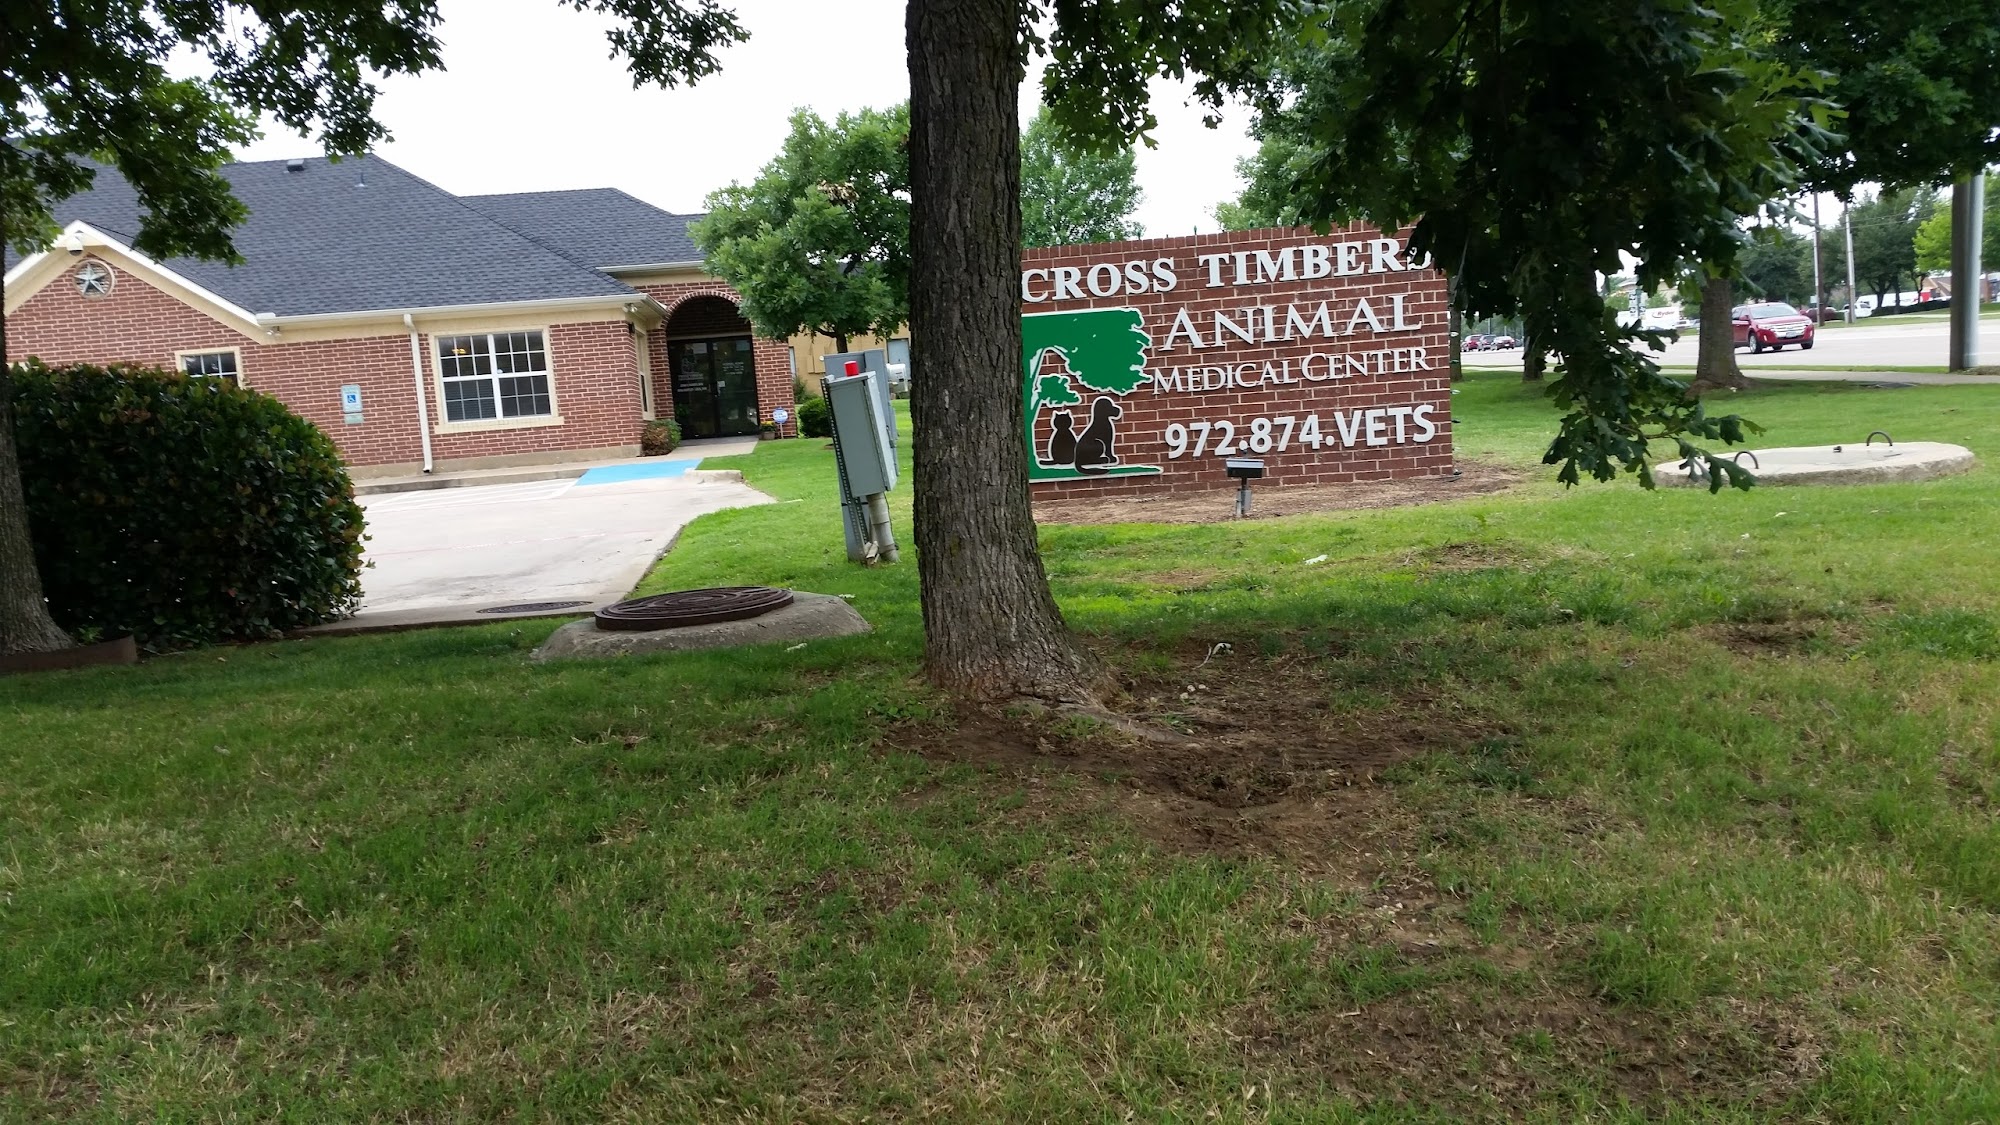 Cross Timbers Animal Medical Center